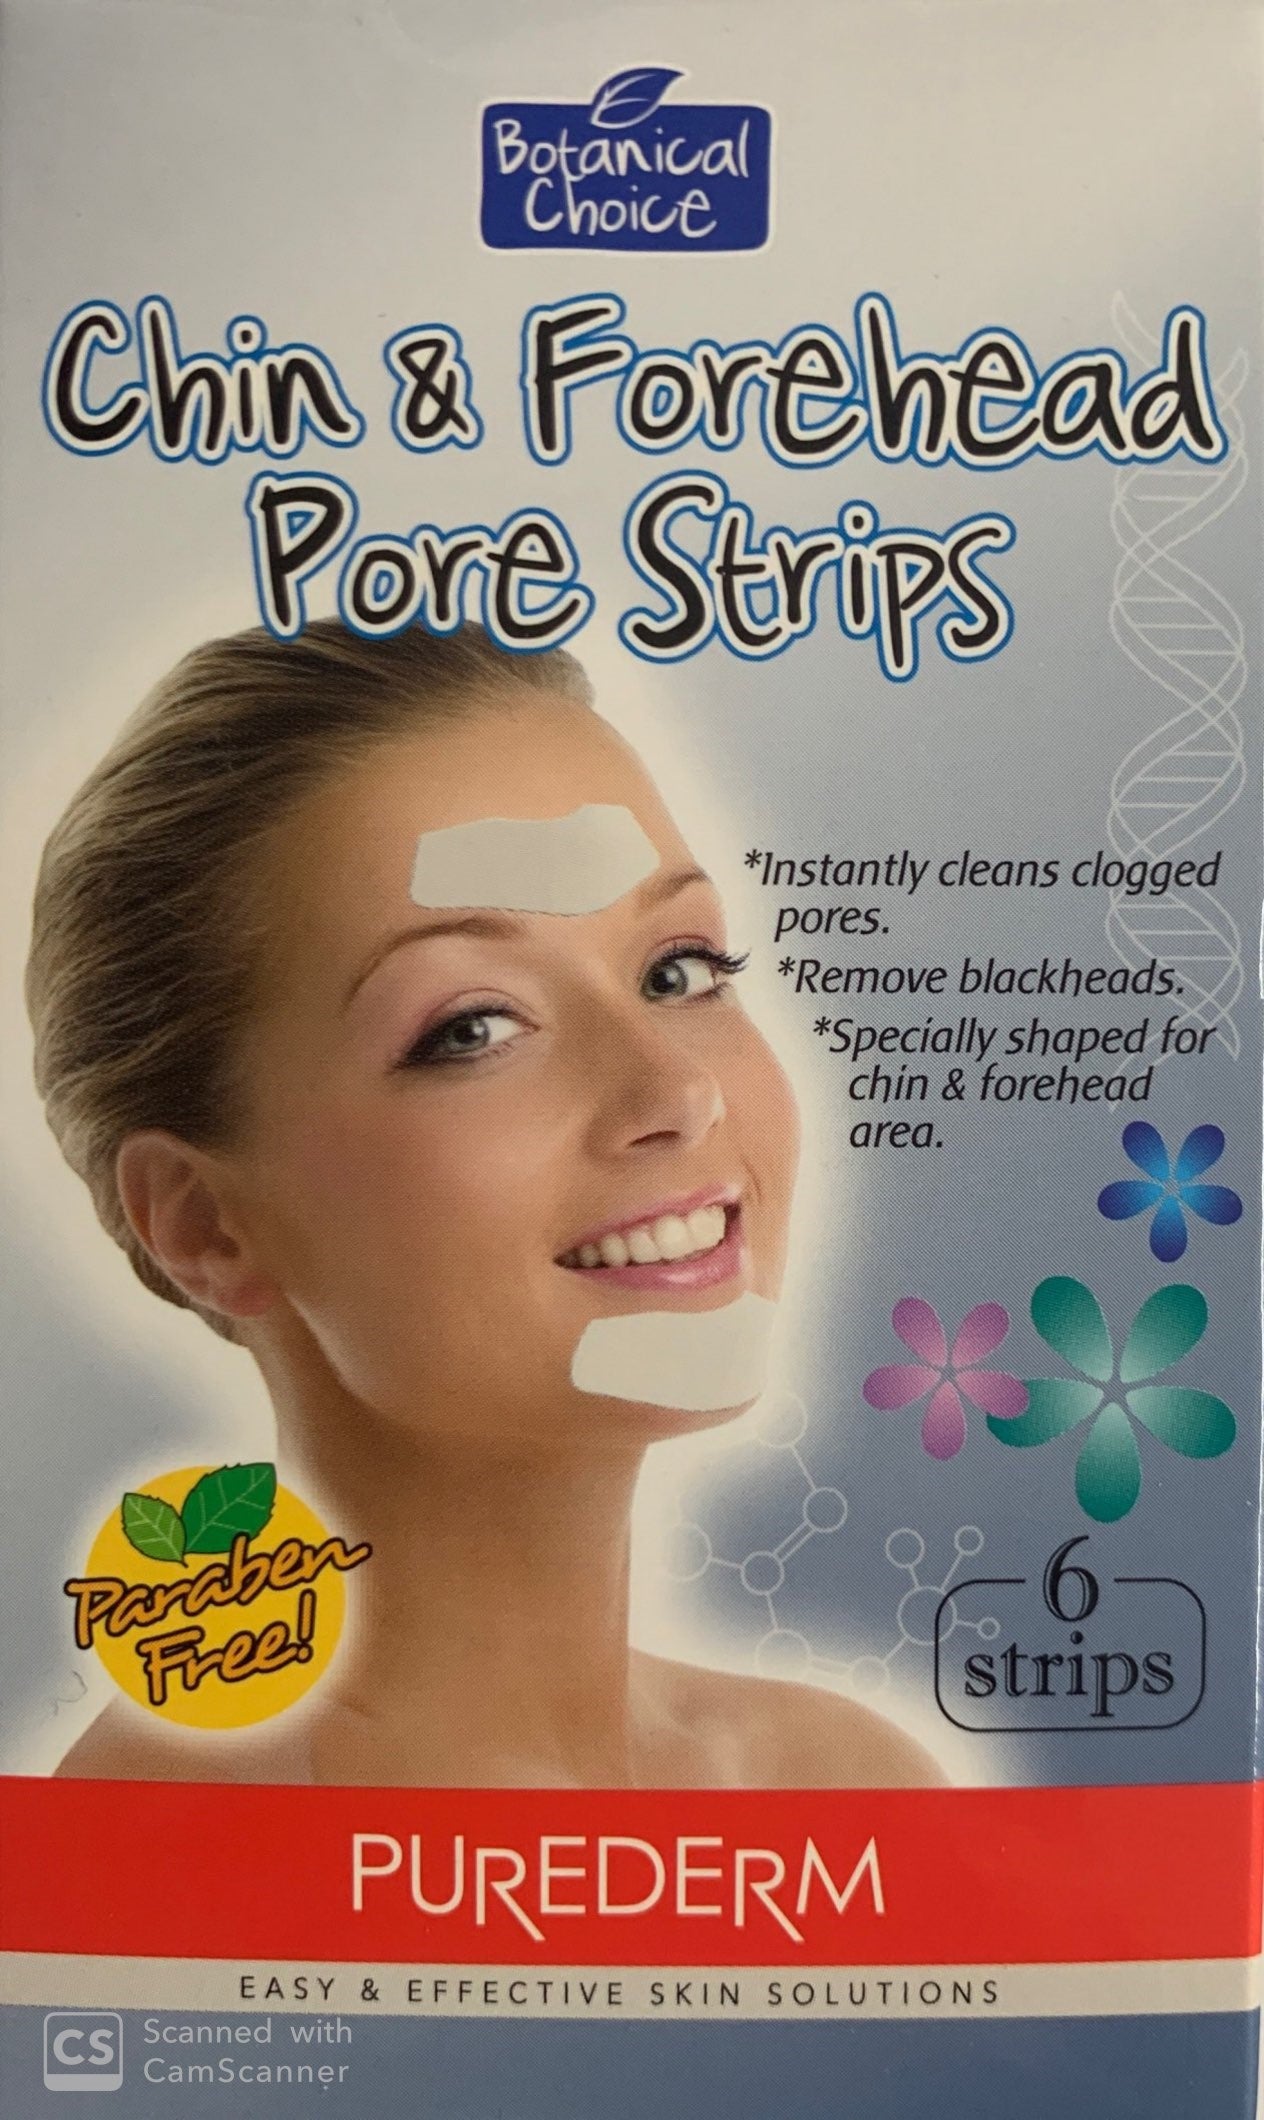 Purederm Botanical Choice Chin & Forehead Pore Strips - Paraben Free 6 Strips